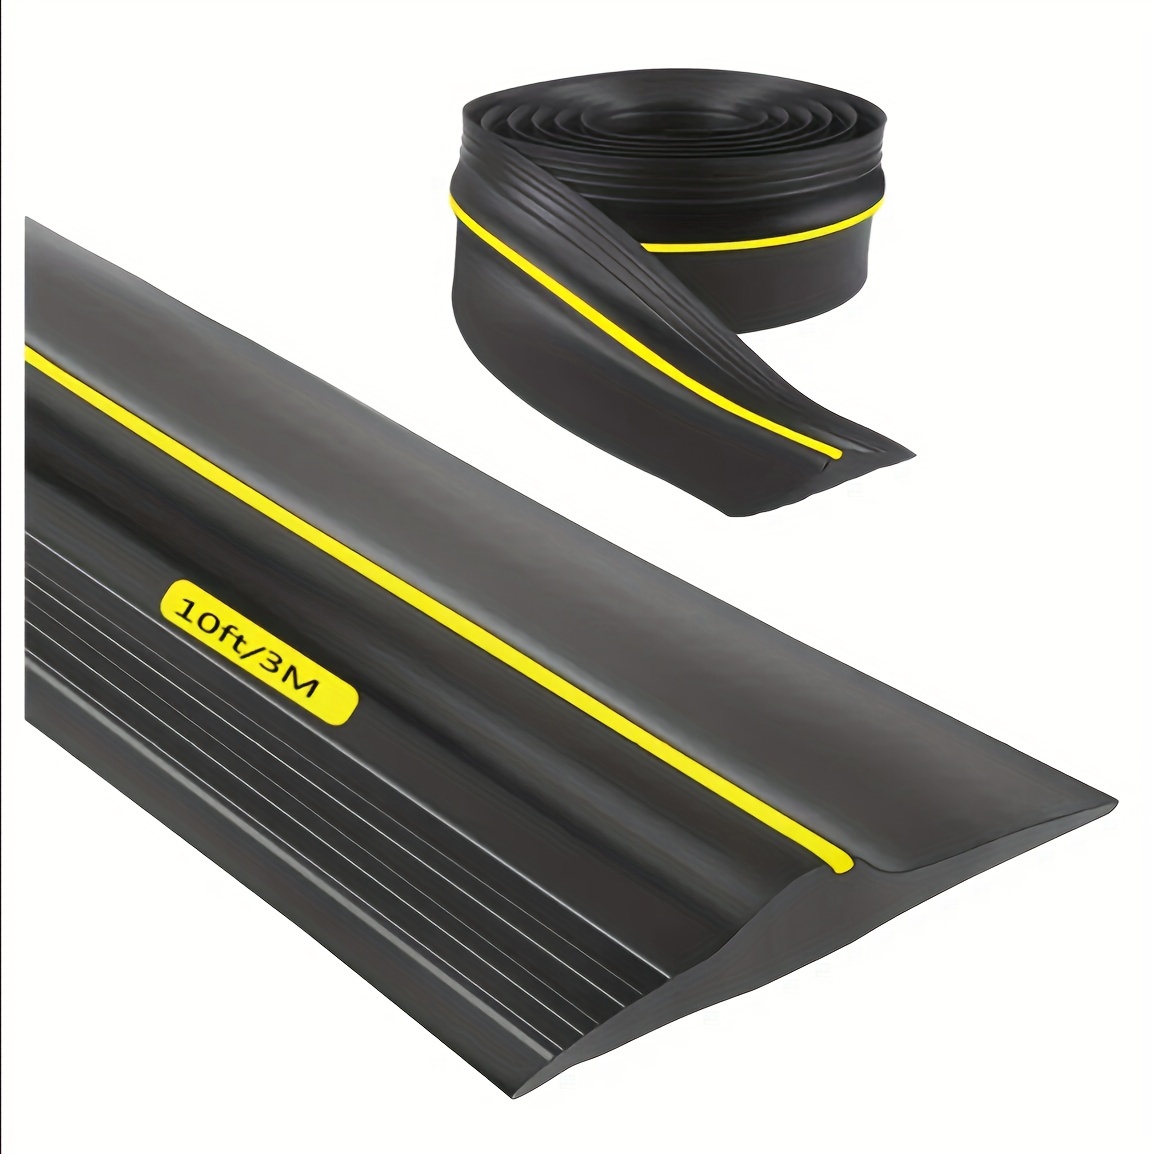 

1pc 10ft/3m Universal Garage Door Bottom Threshold Seal Strip, Weatherproof Diy Enhanced Rubber Seal, Yellow Safety Stripe